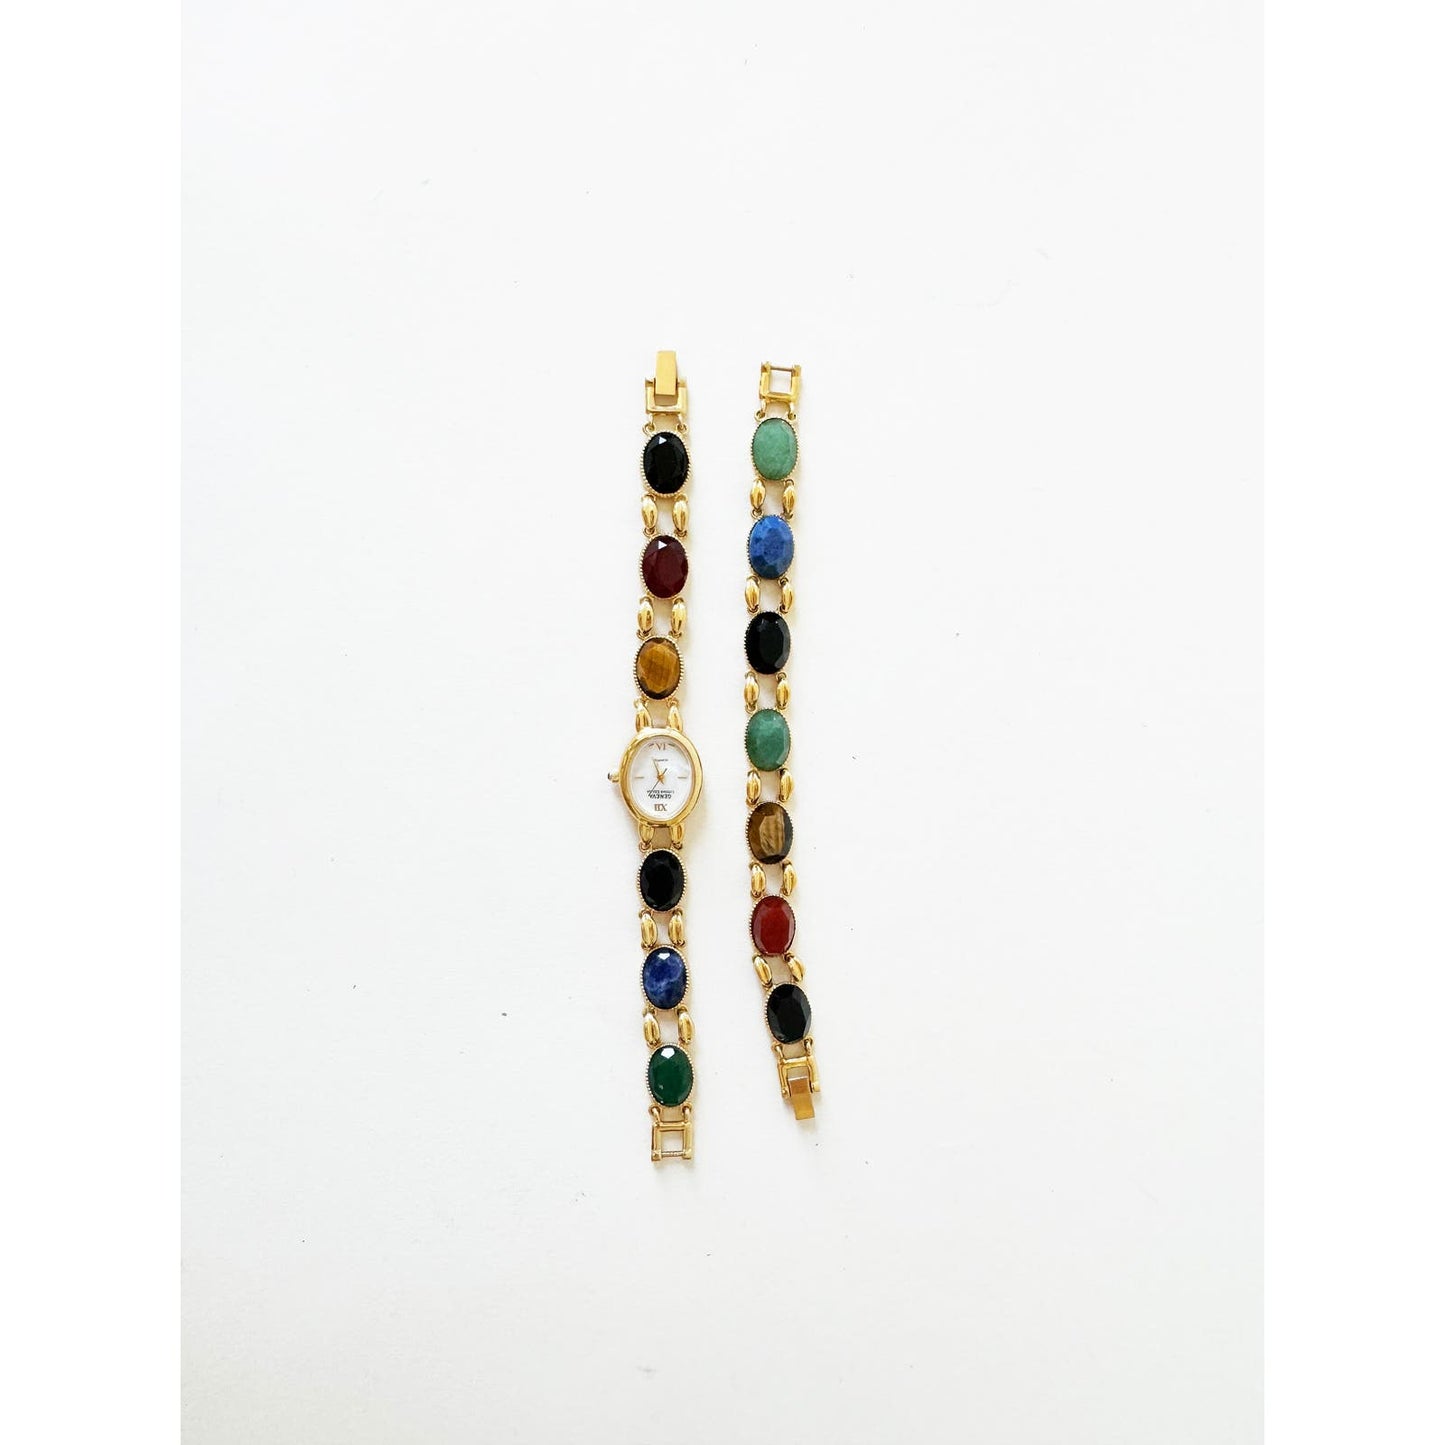 Watch Necklace | Vintage Watch Colorful Stone Choker or Bracelet